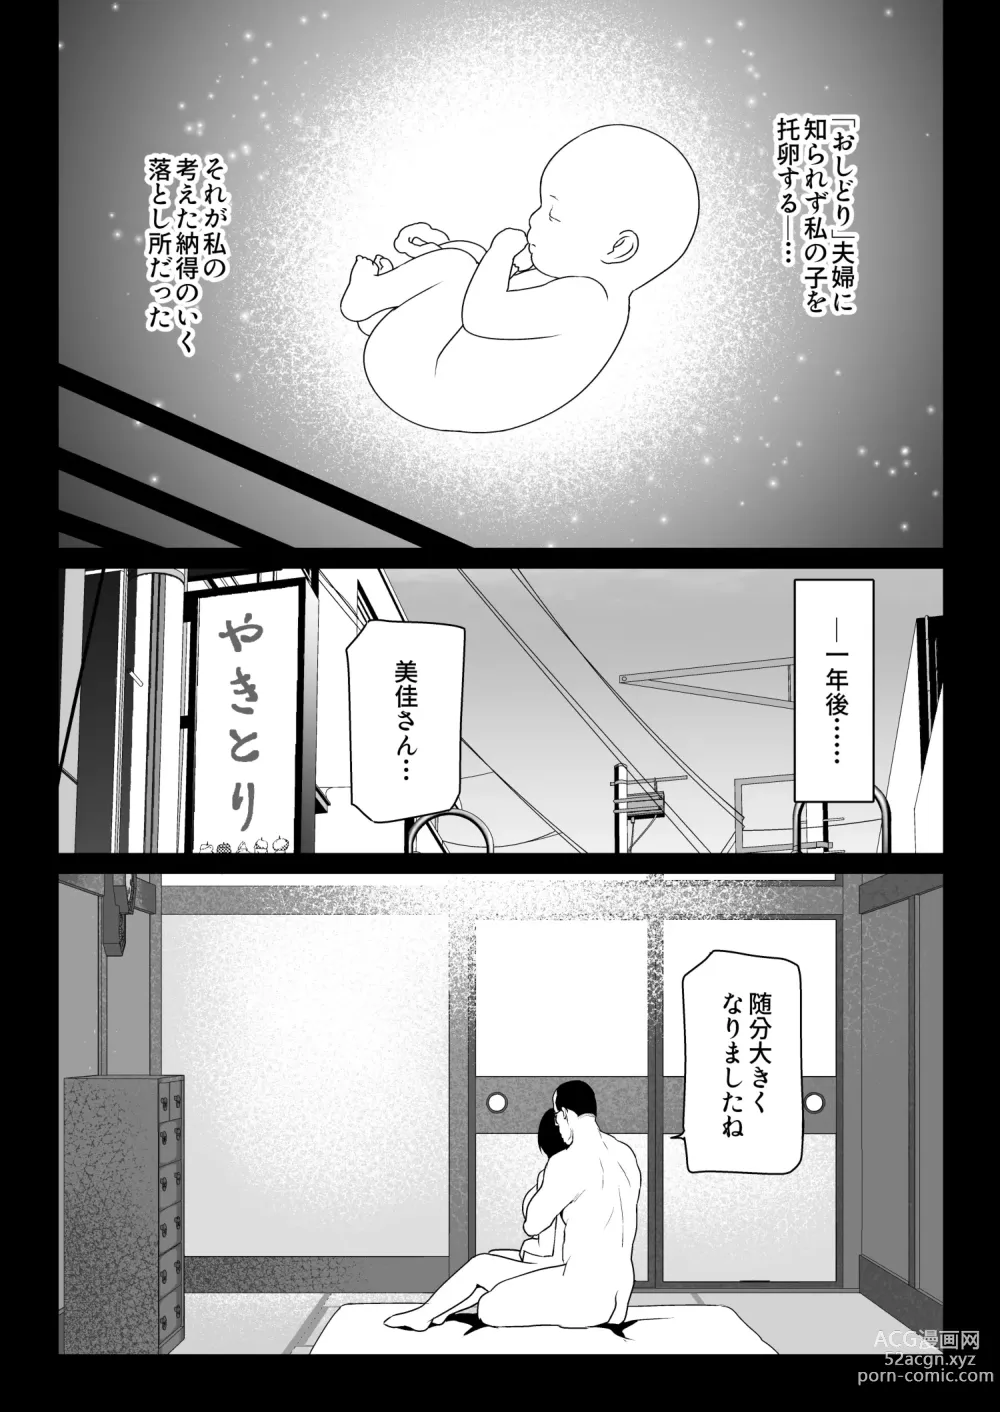 Page 74 of doujinshi Oshidori Fuufu Yakitorare